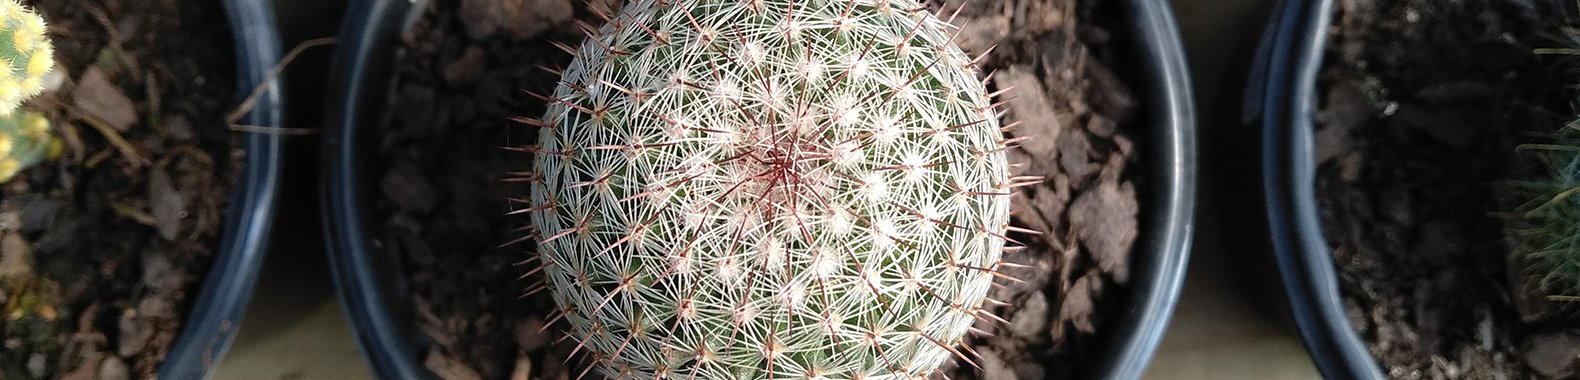 cactus suculentas cultivo np11 nutriplan